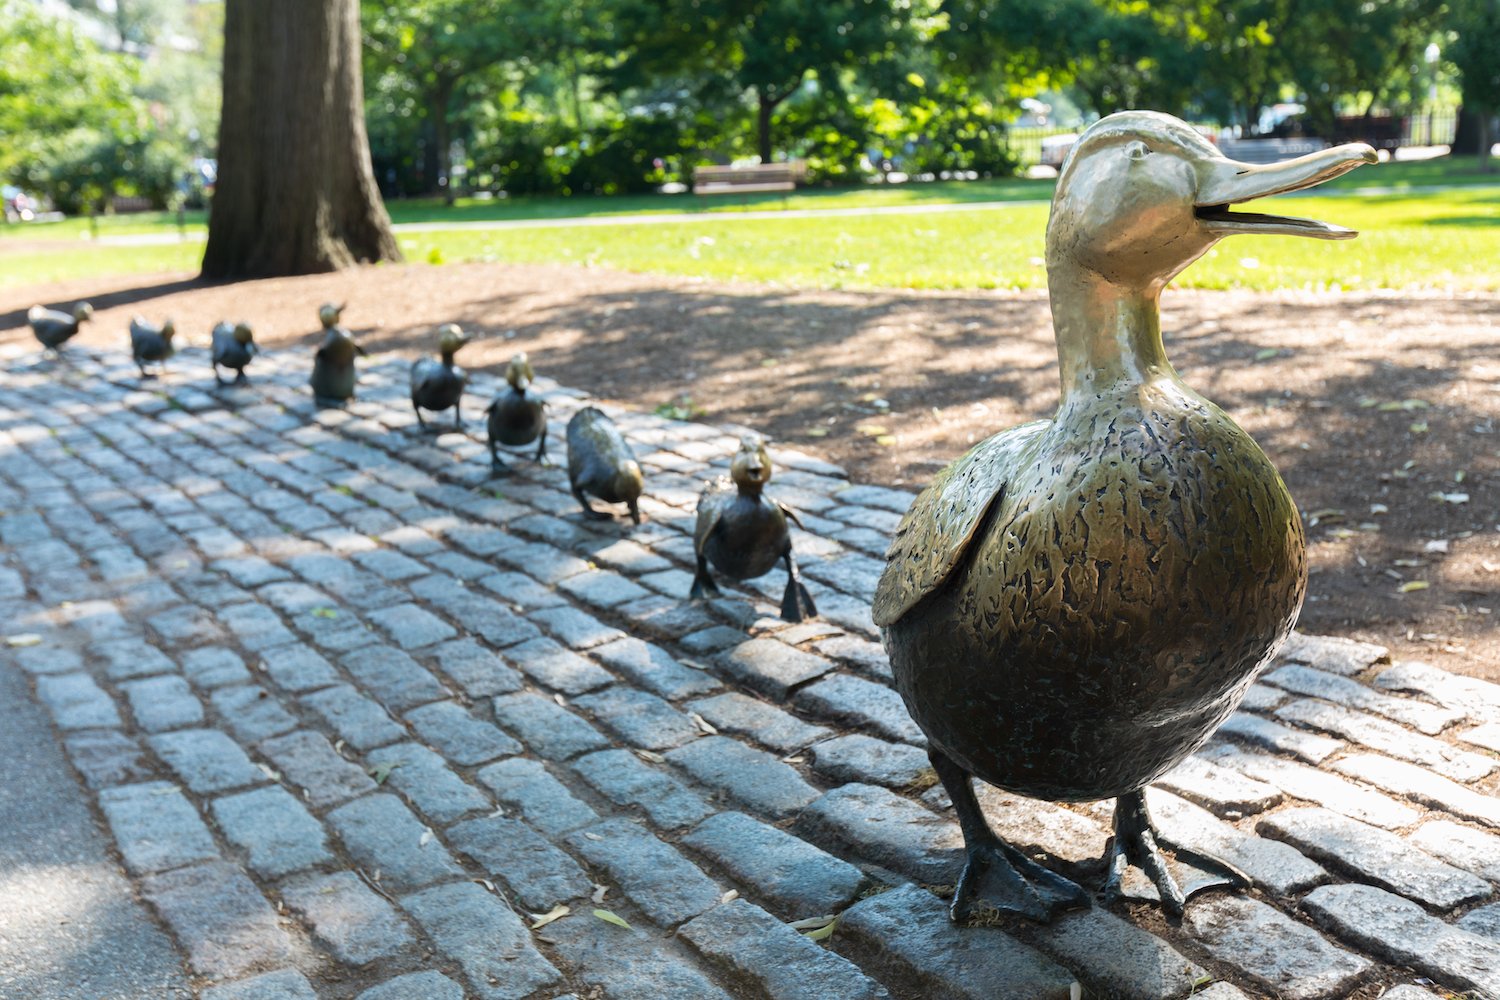 The Make Way For Ducklings installation at Boston Public Garden.